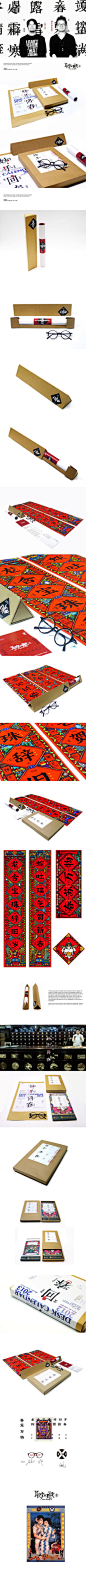 【maomaopi年前做的一批中国风元素设计】对联中，包含二十四节气，以及每一个节气对应的特征插画，还有古代的韩语拼音法则，大陆上已经不再使用，但在台湾还在继续使用着。